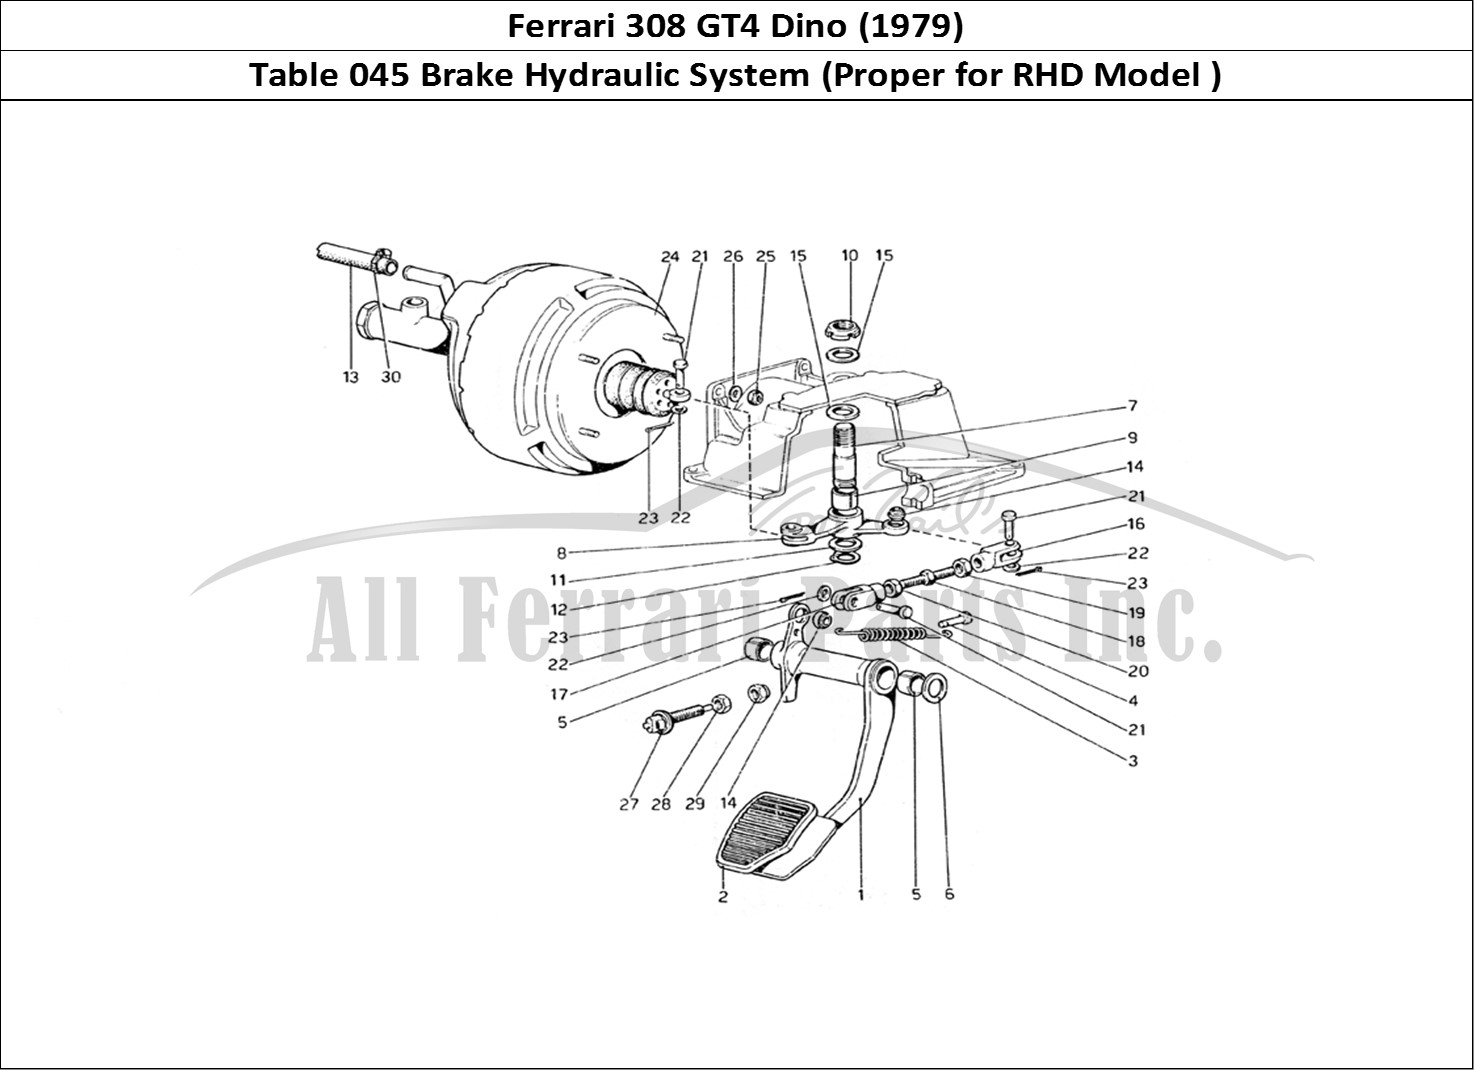 Ferrari Parts Ferrari 308 GT4 Dino (1979) Page 045 Brake Hydraulic System (V